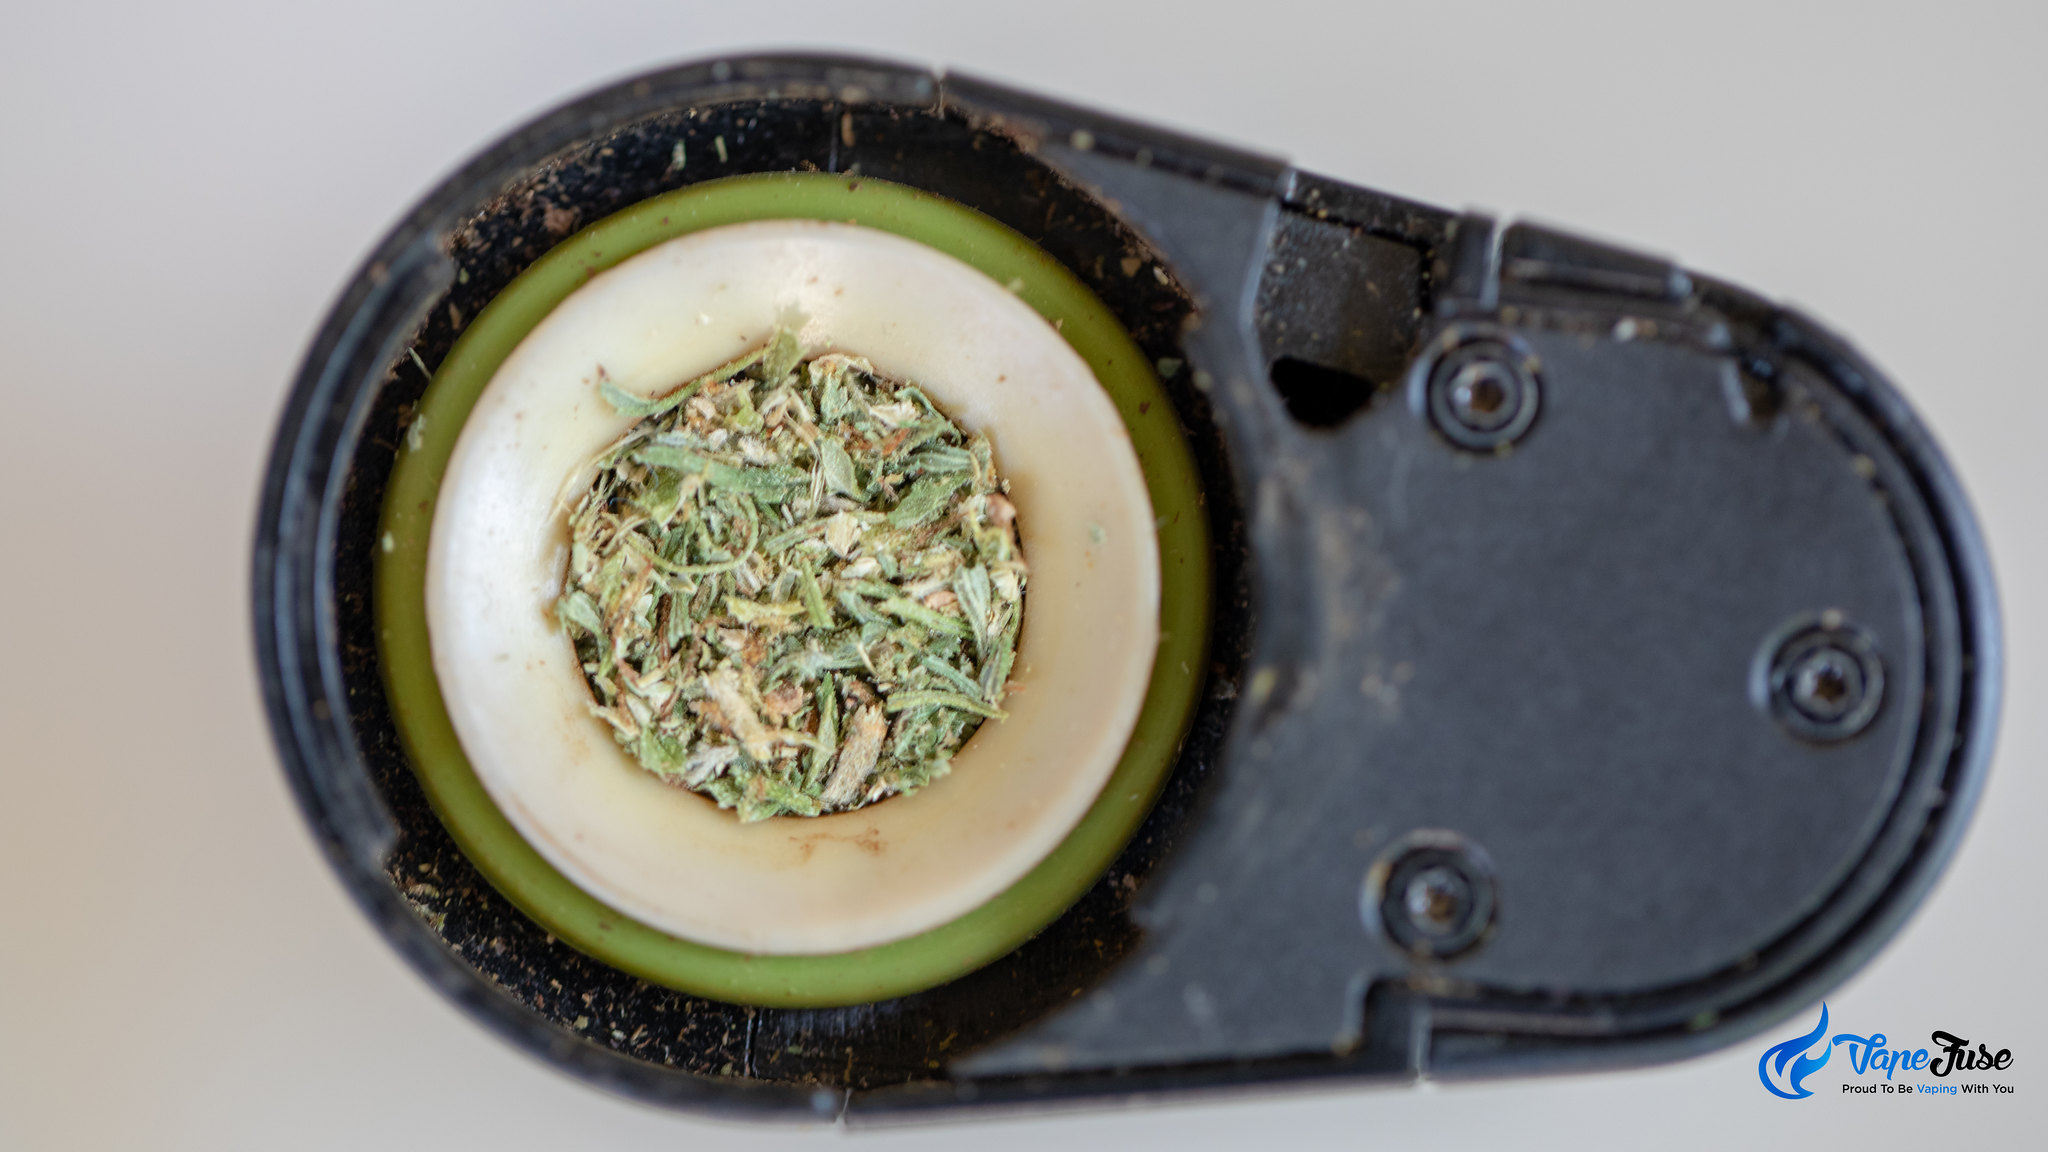 Portable dry herb vaporizer